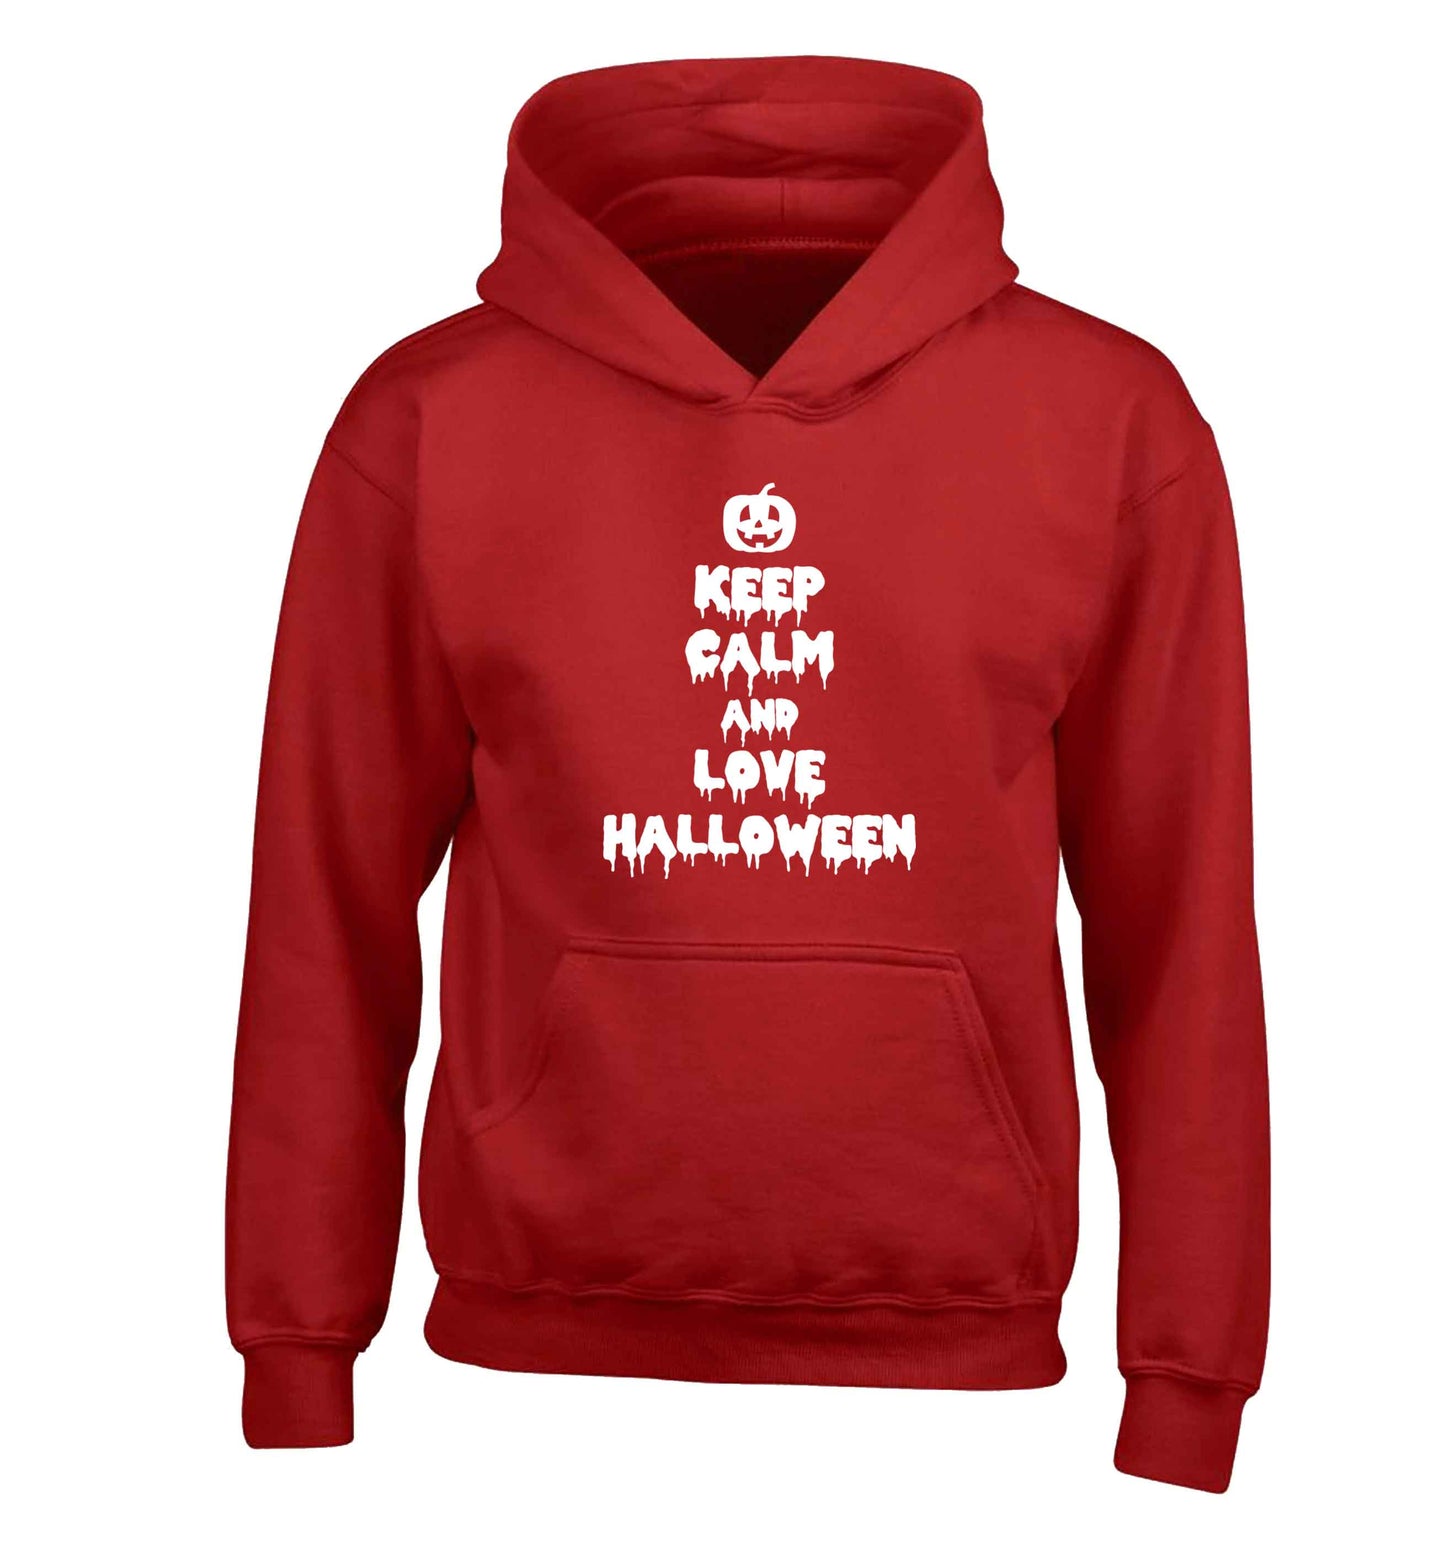 Keep calm and love halloween children's red hoodie 12-13 Years